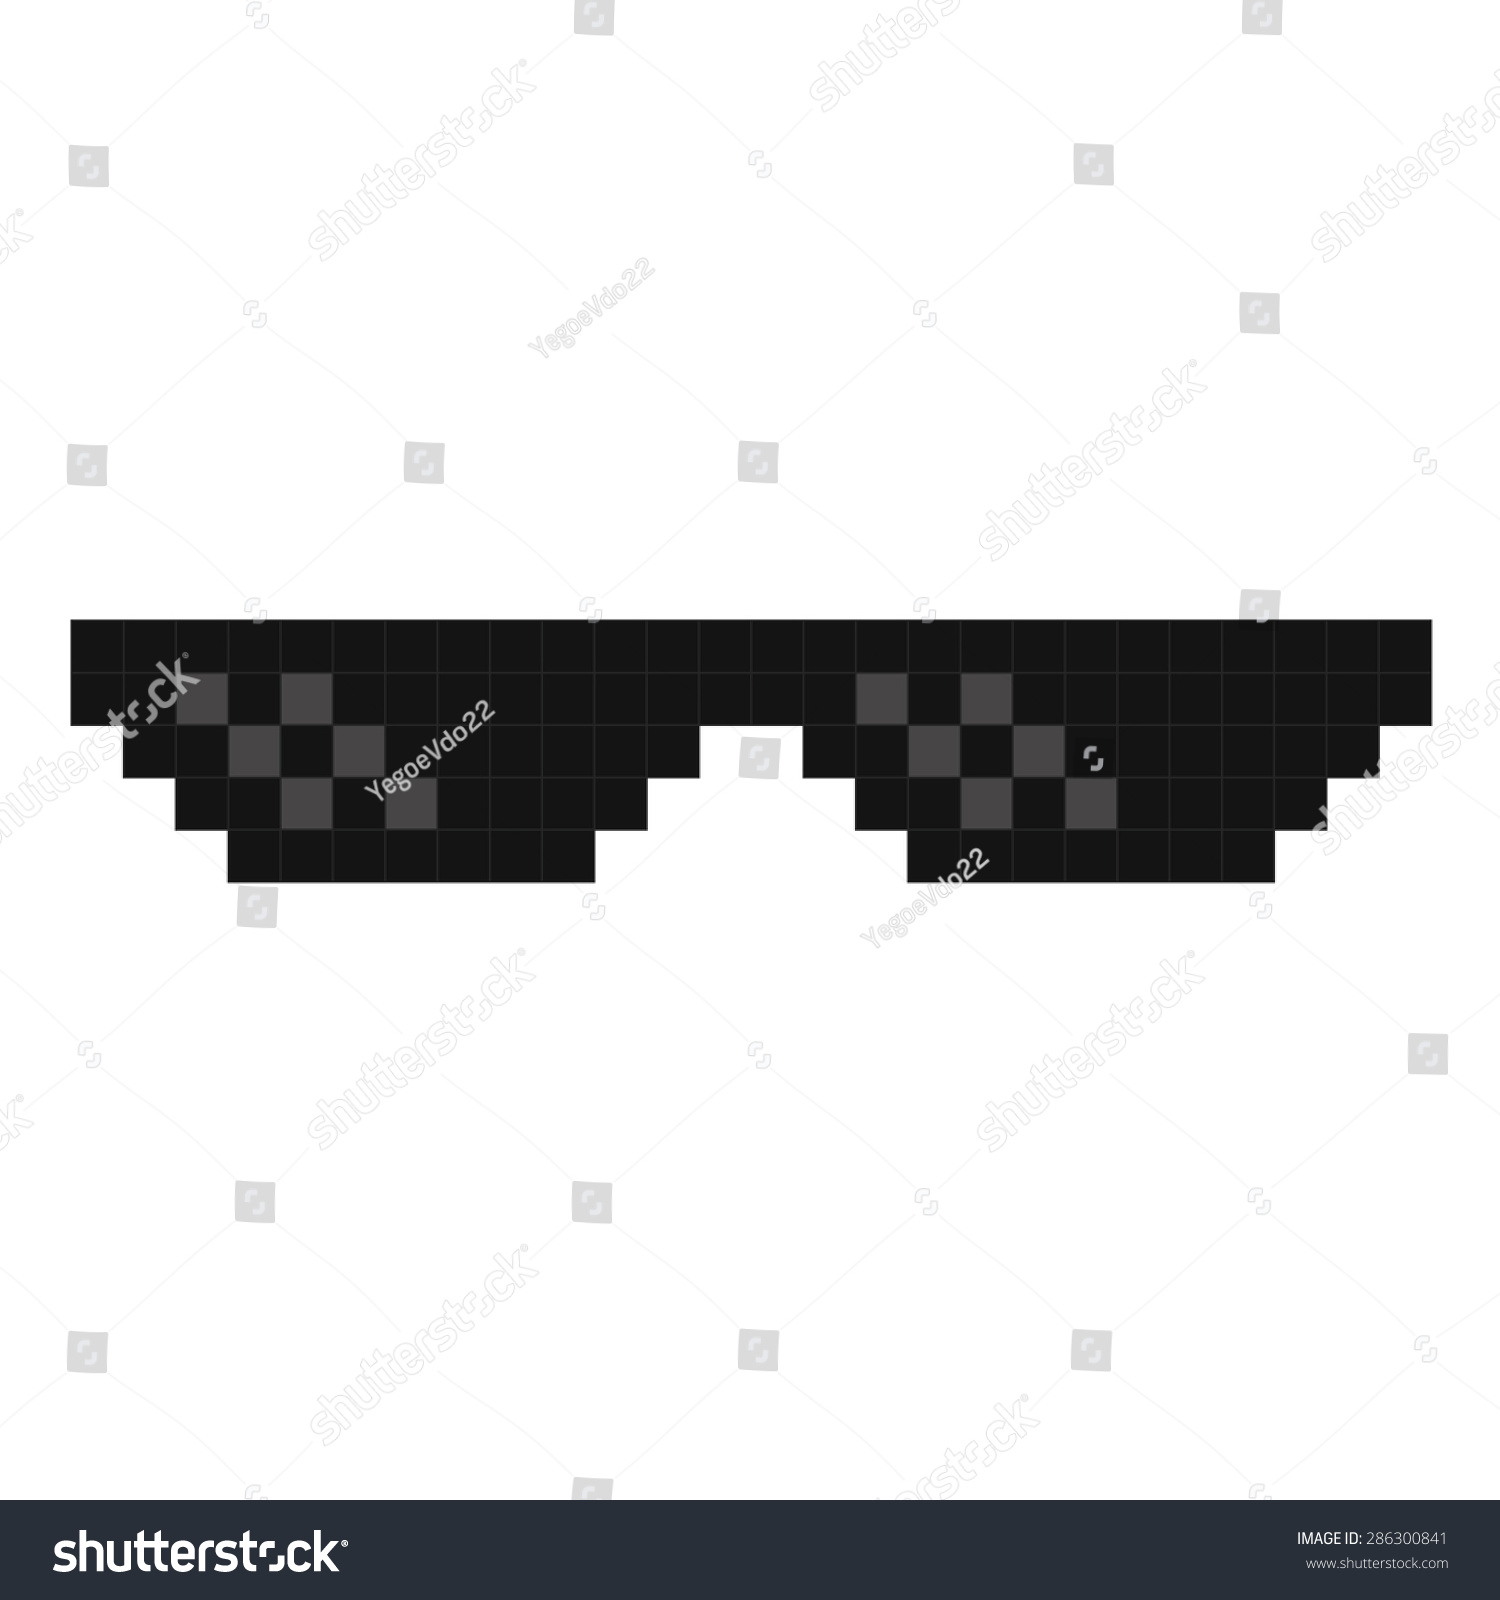 Glasses Pixel Vector Icon - 286300841 : Shutterstock